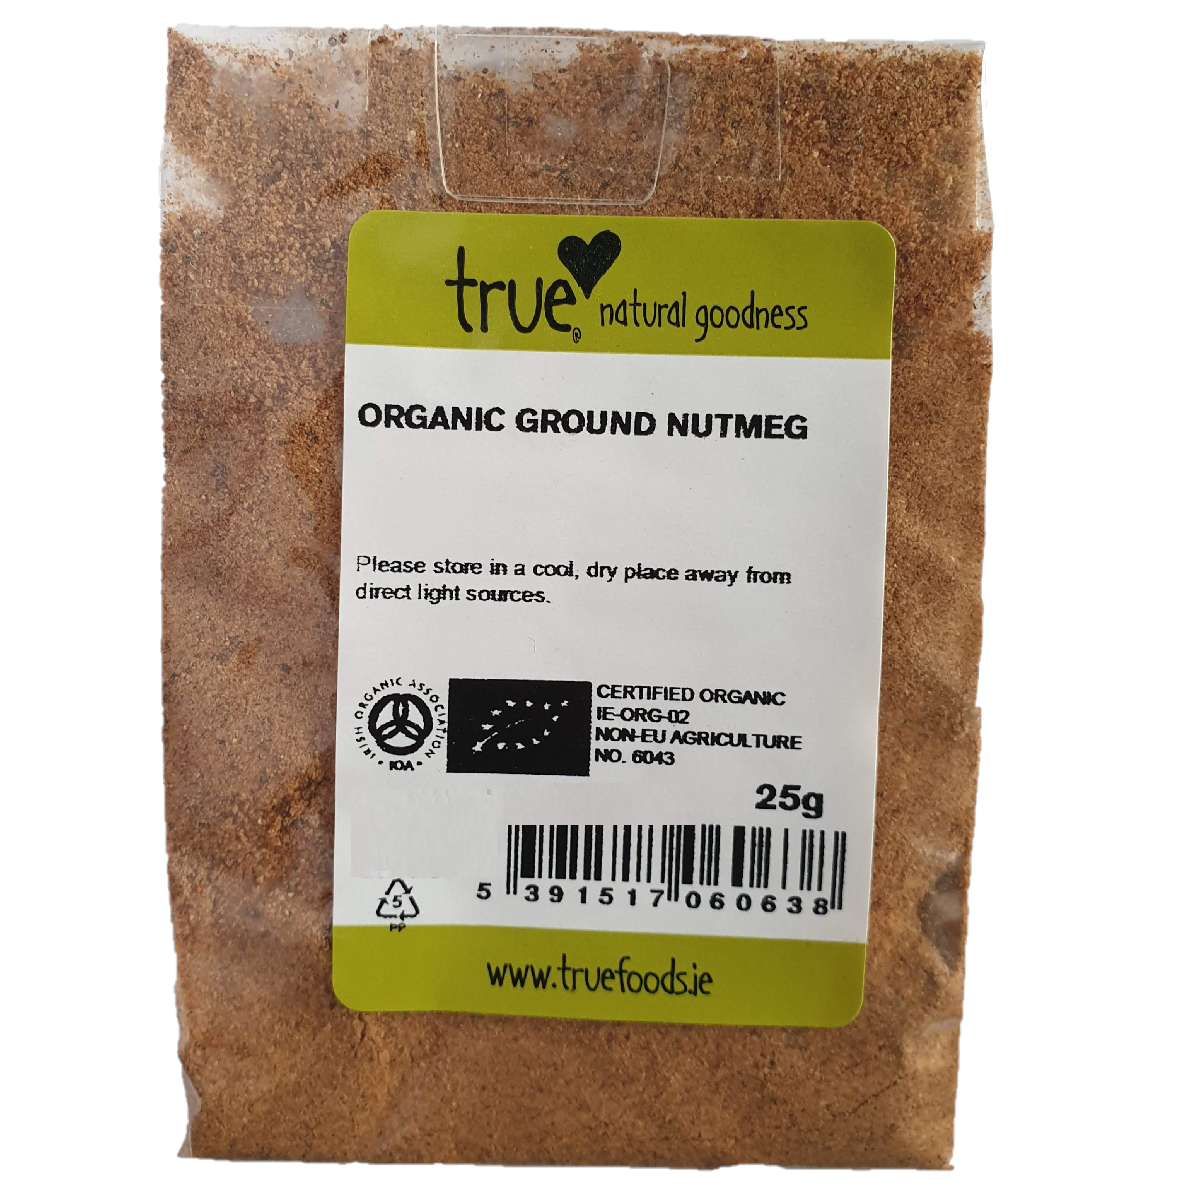 True Natural Goodness Organic Ground Nutmeg 25g